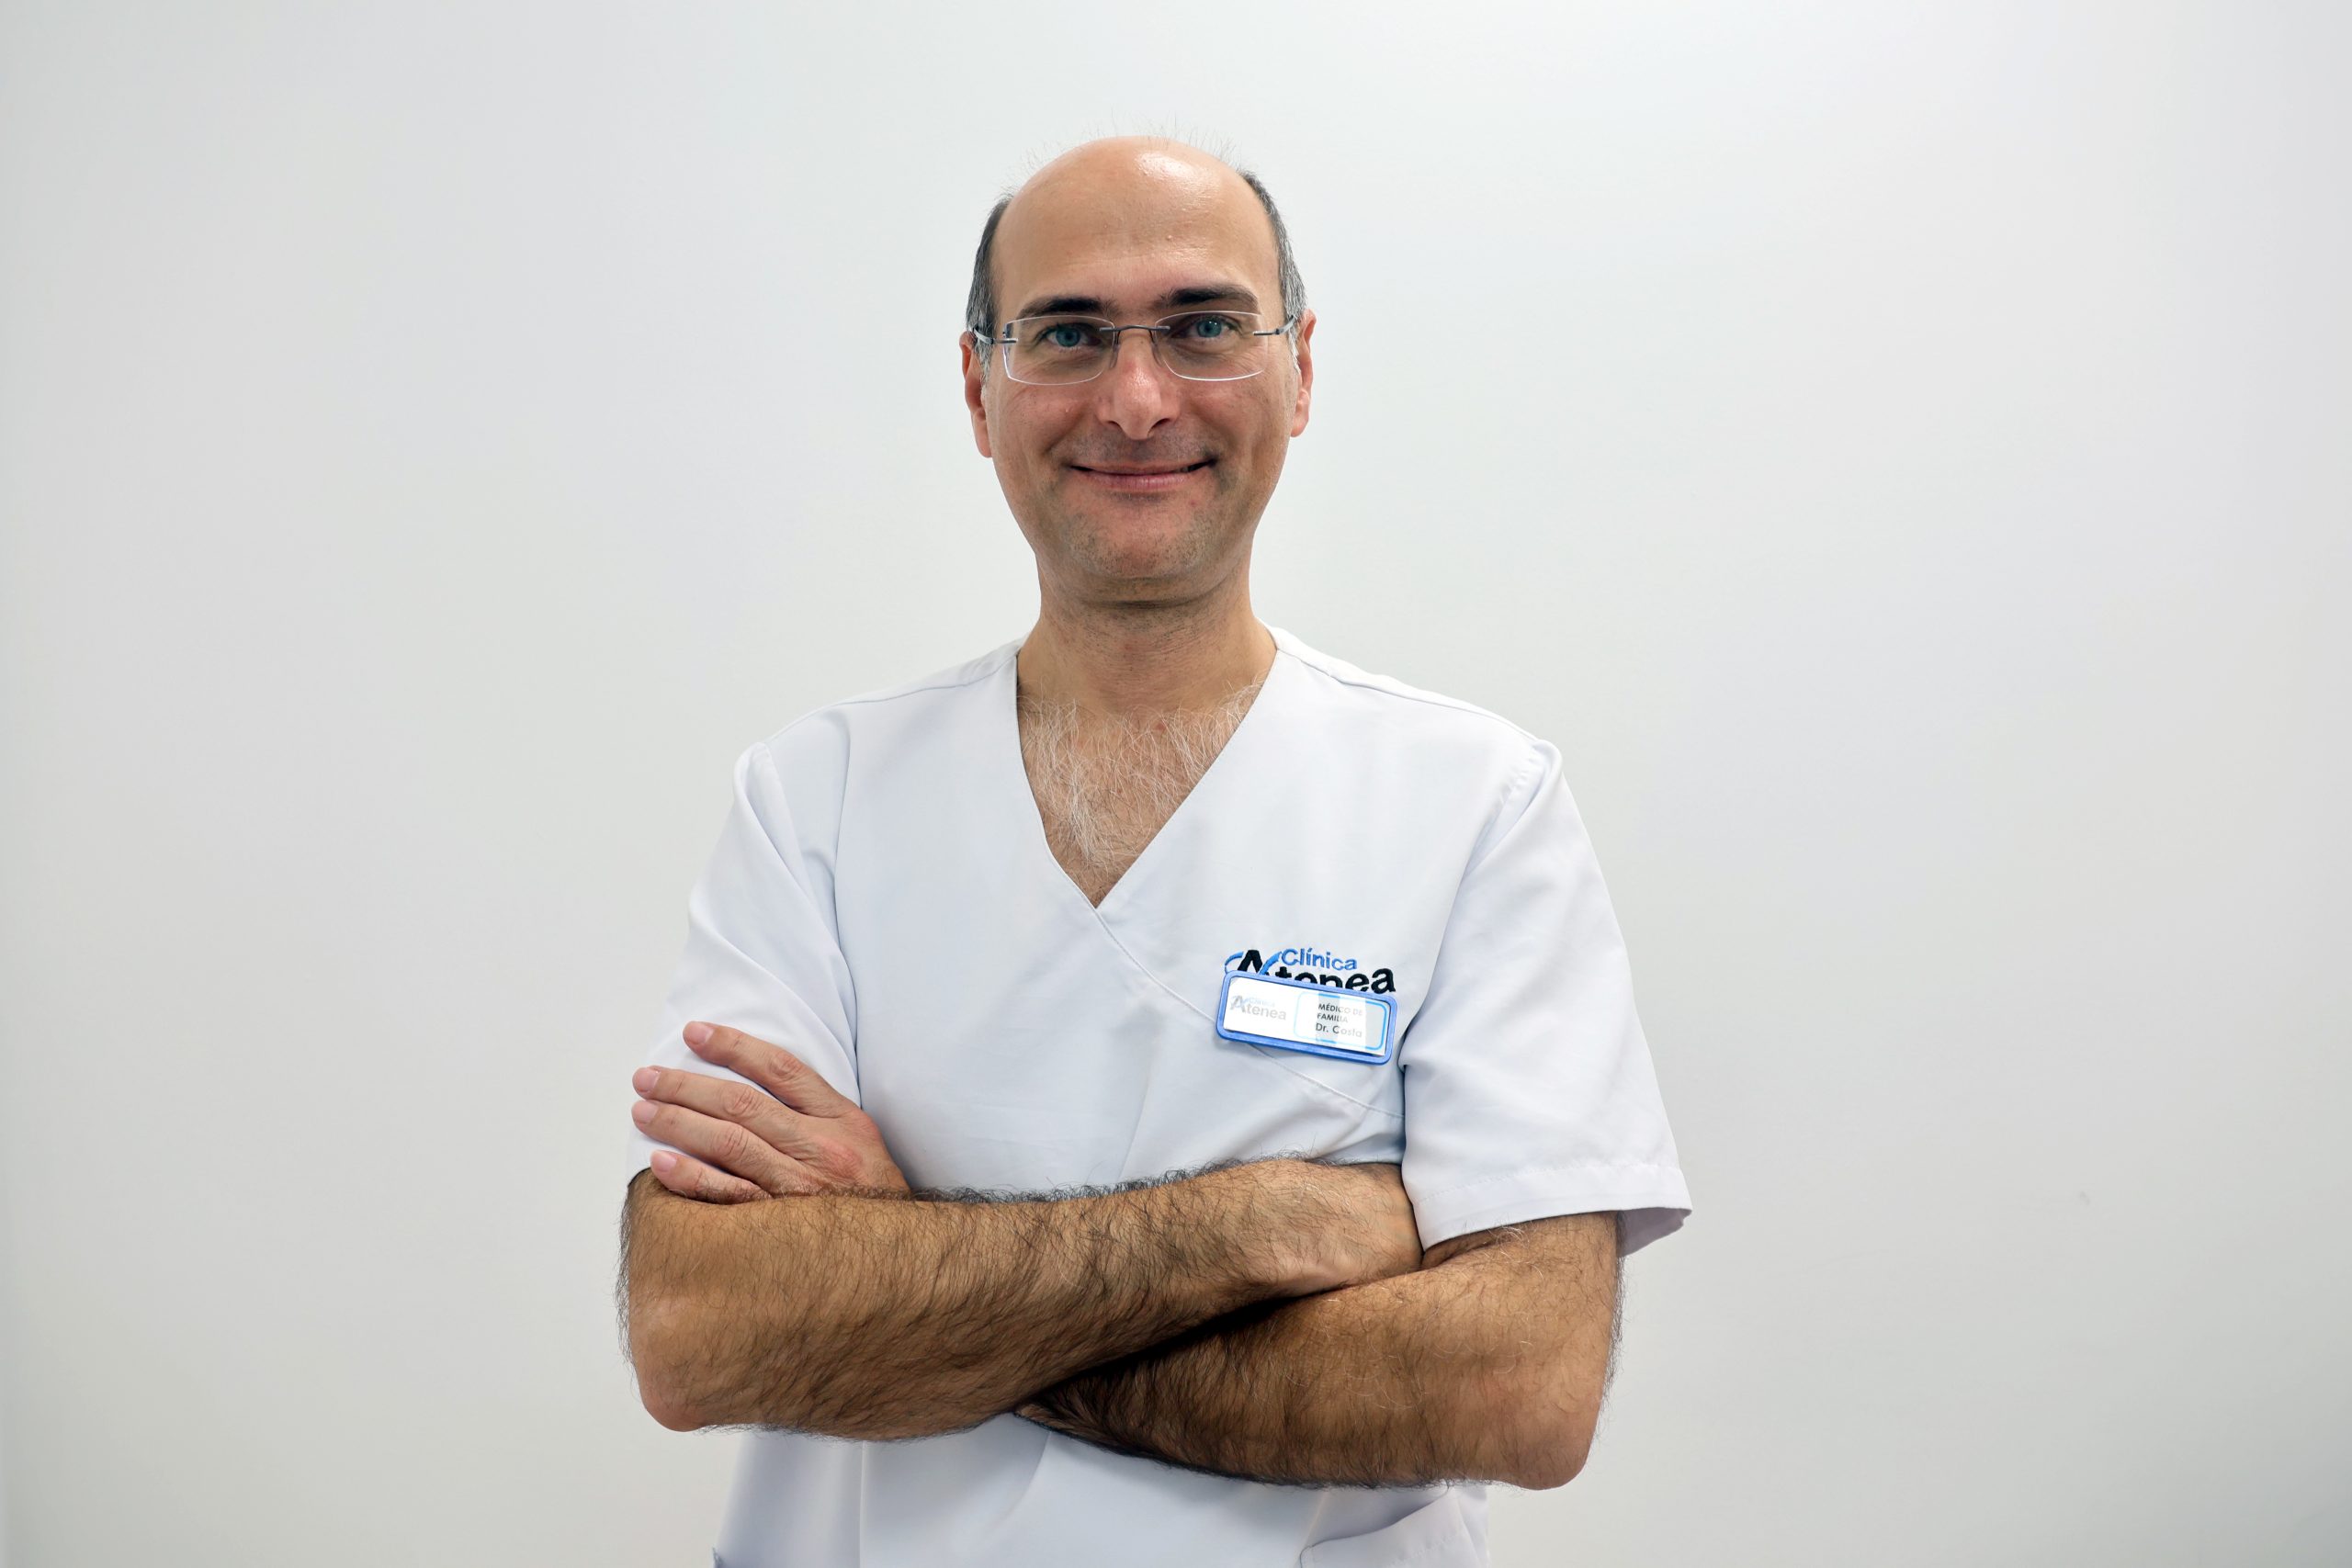 Doctor Jose Antonio Costa